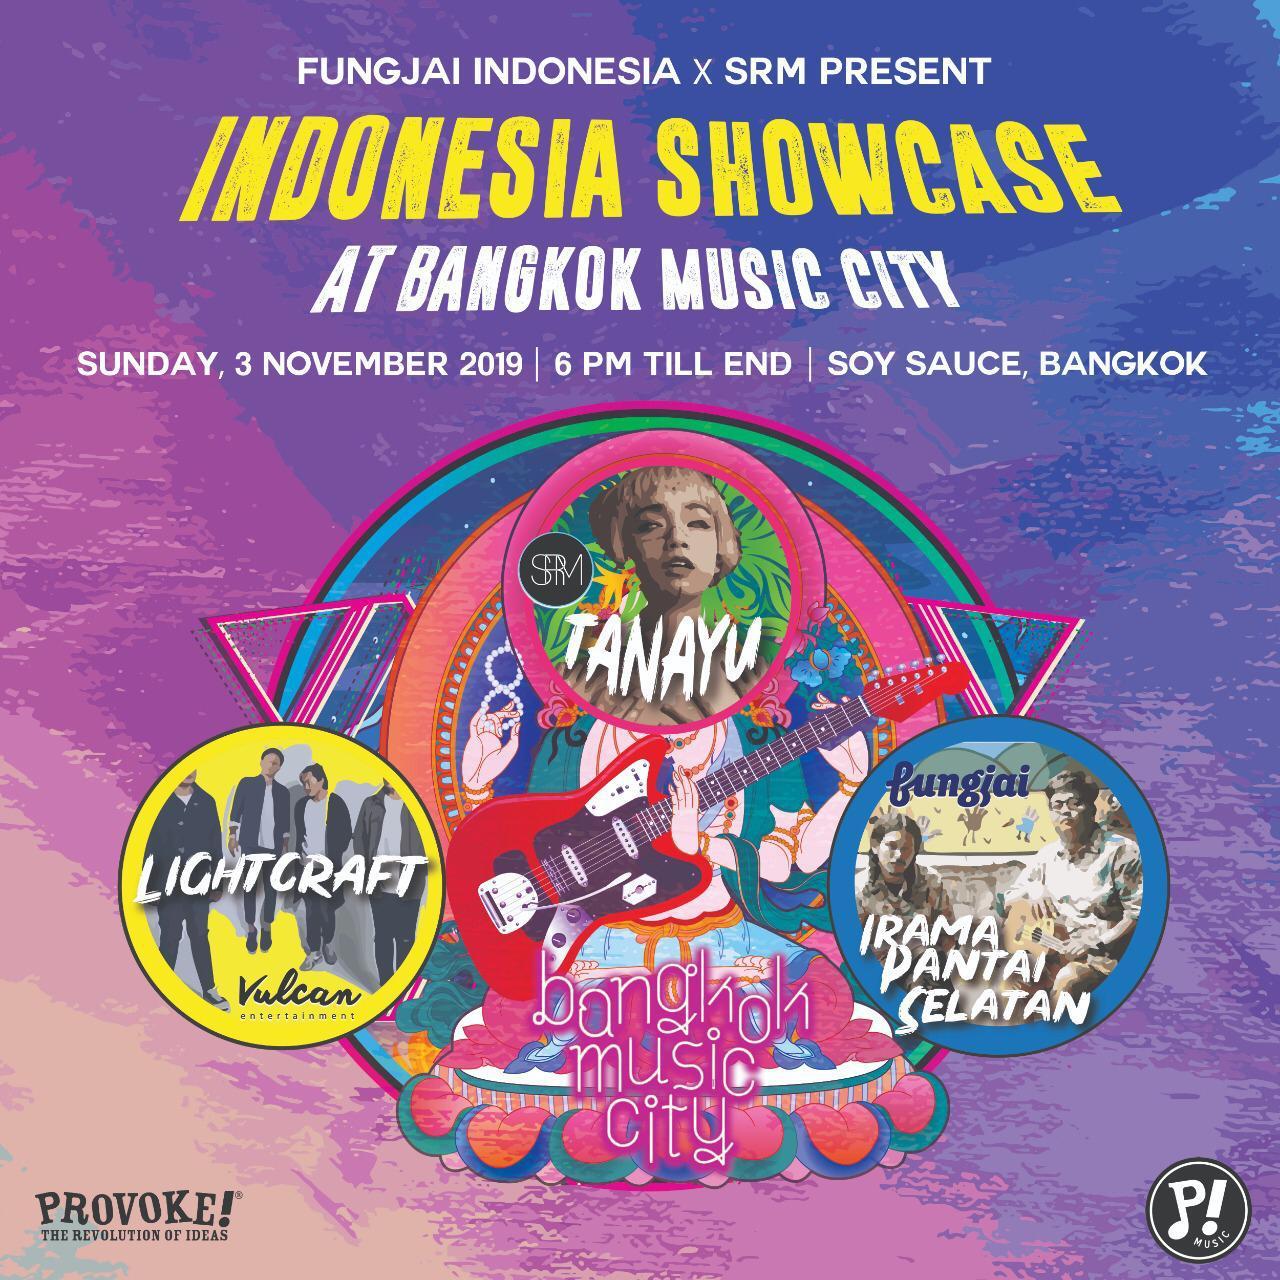 031d0d7e25d2e2a387c5e47281a9dedfddb9e9c9 Lightcraft akan tampil di Monsoon Music Festival 2019 Vietnam & Bangkok Music City 2019, Thailand